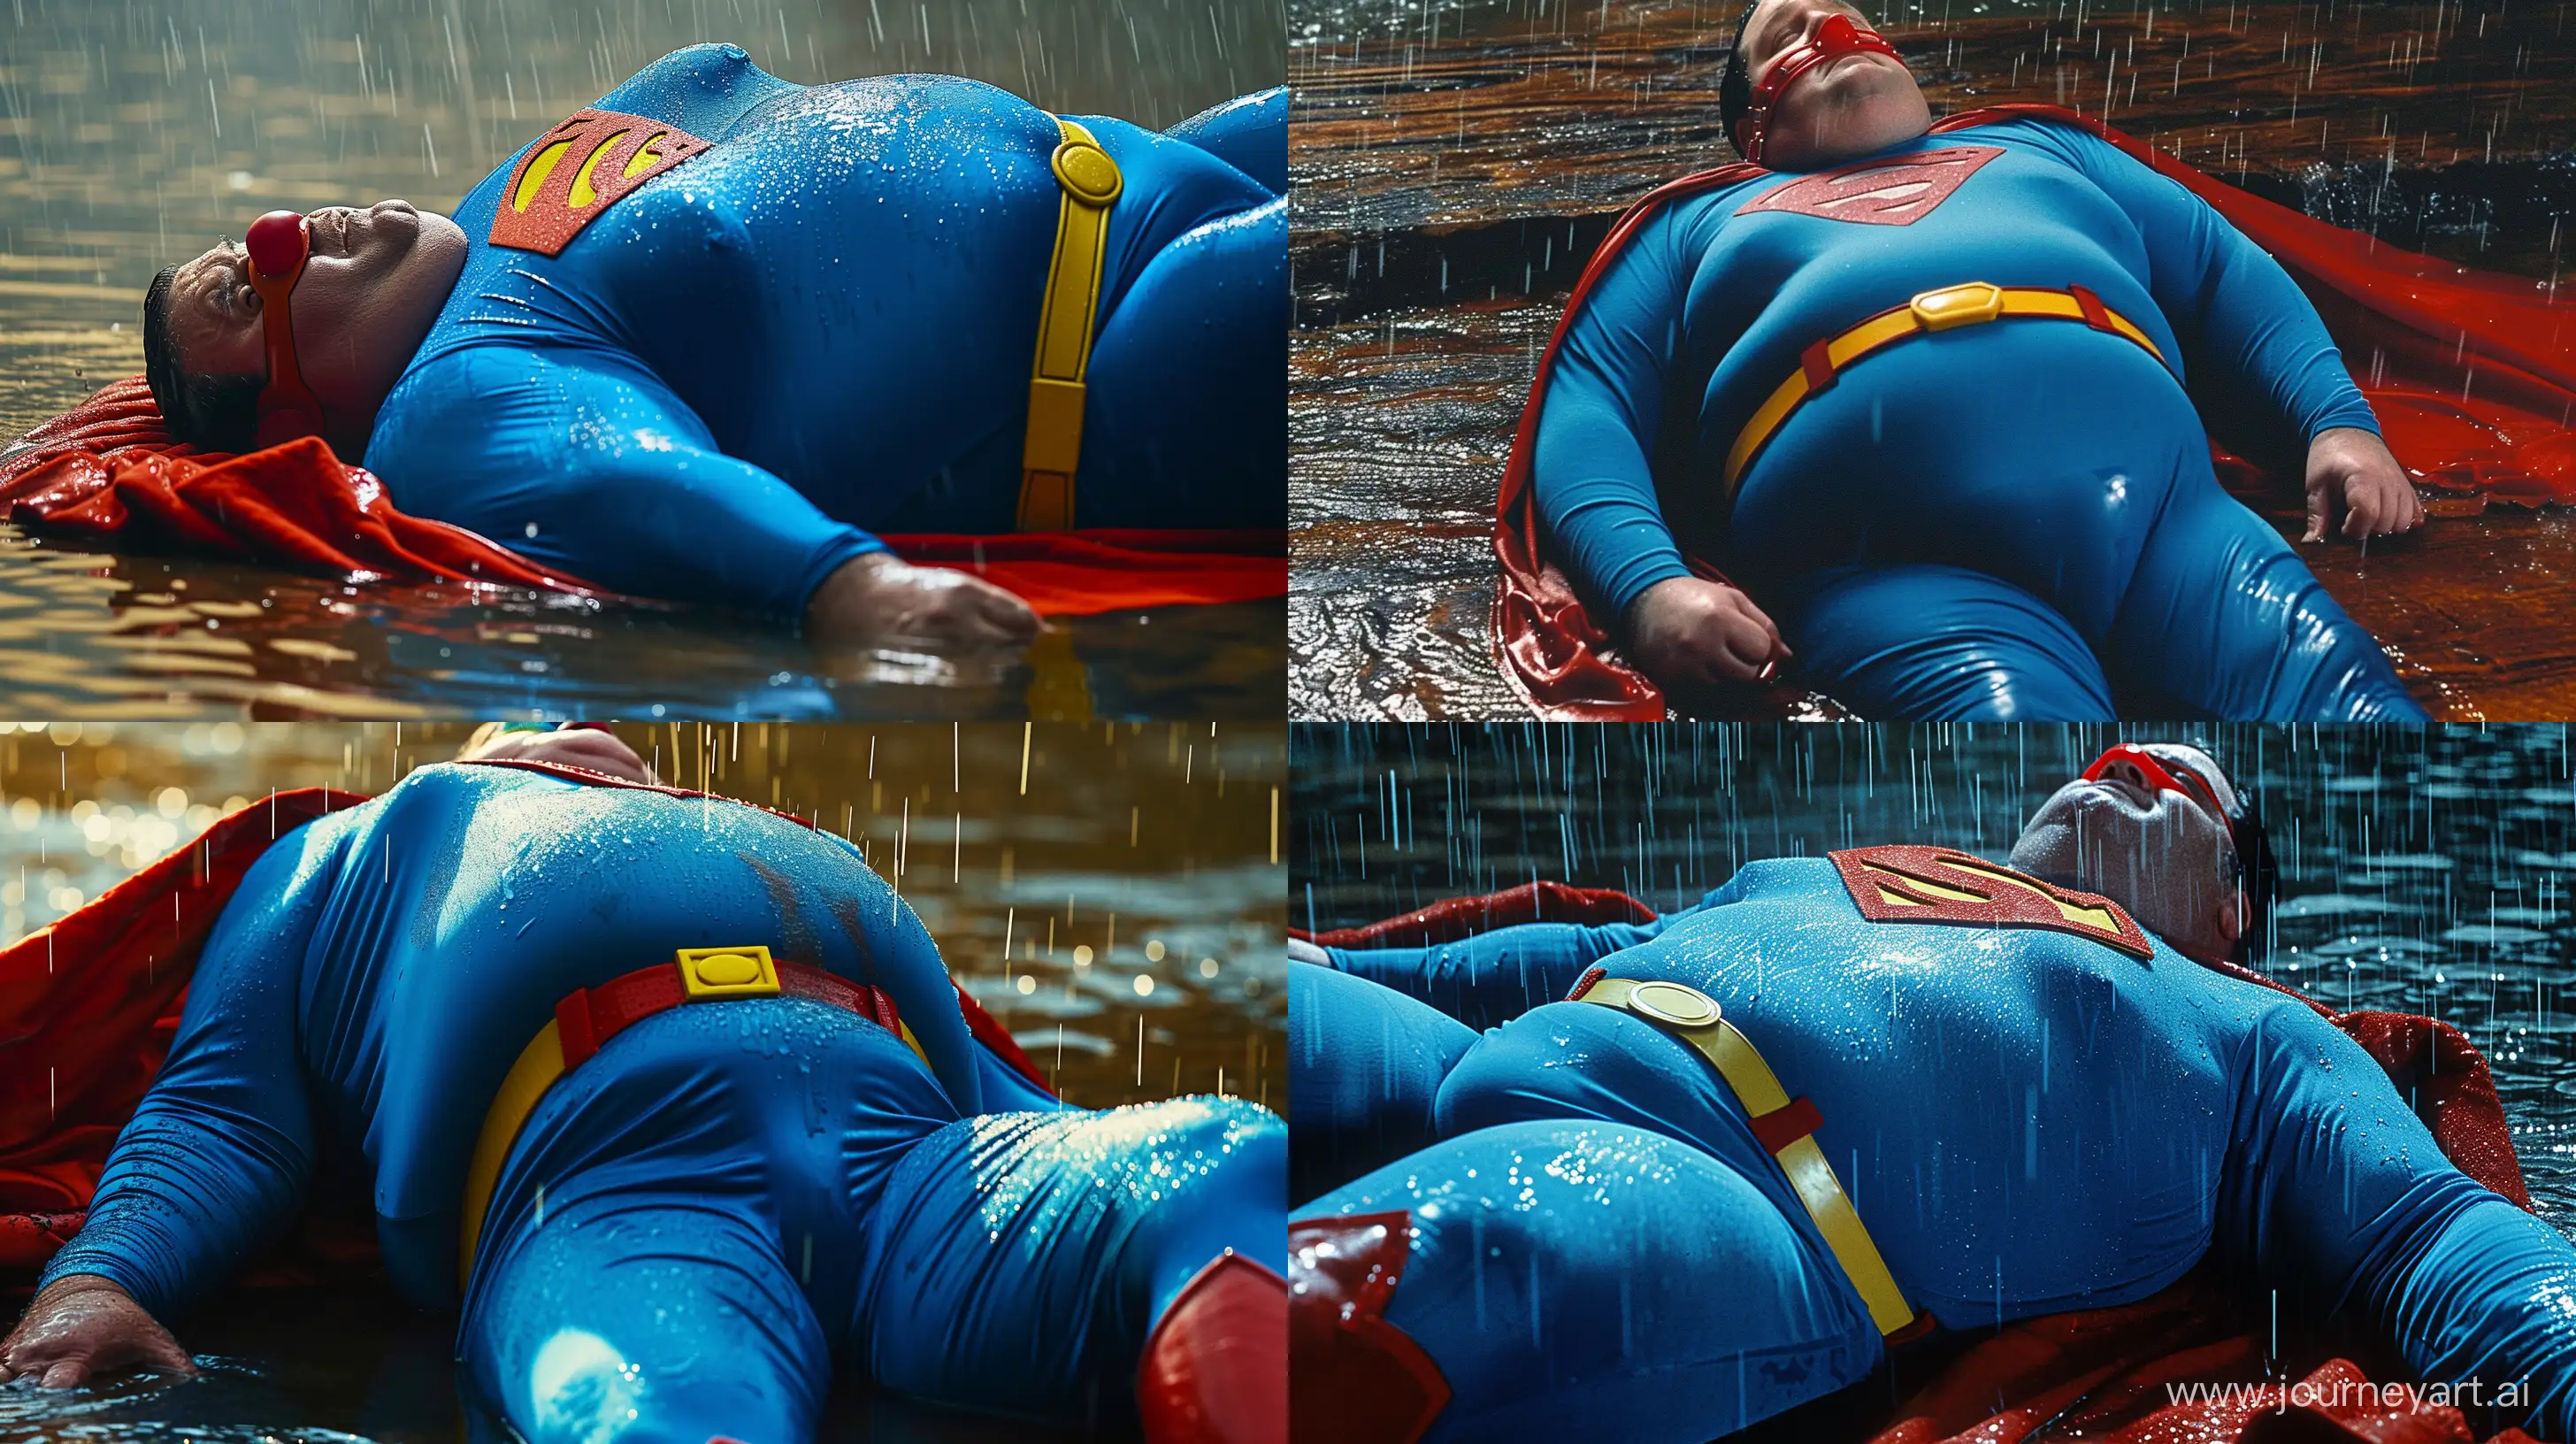 Elderly-Superman-Under-the-Rain-Nostalgic-Portrait-of-a-60YearOld-in-Iconic-1978-Costume